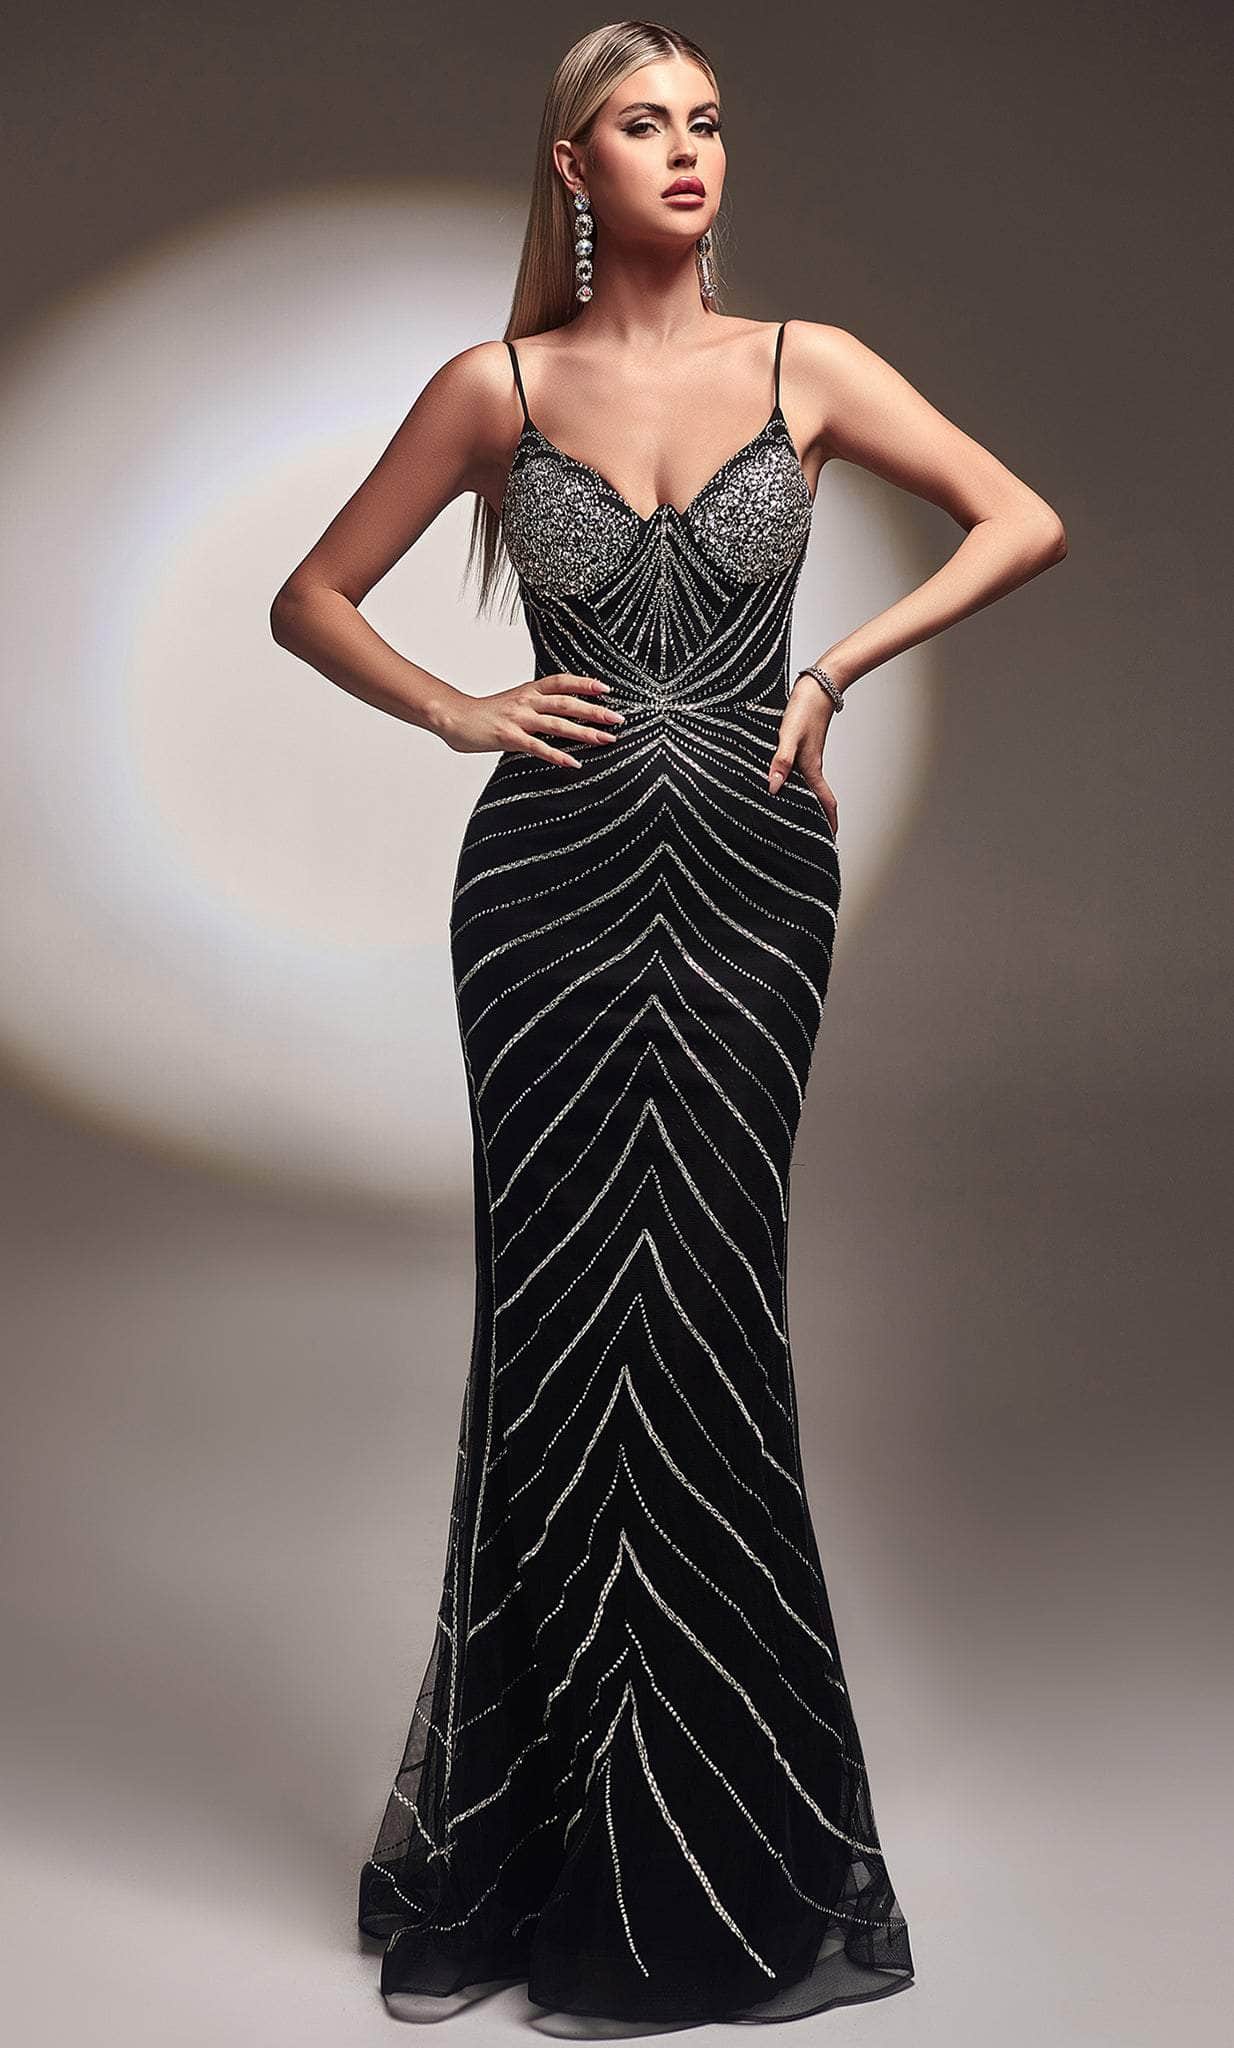 Ladivine CR866 - Embellished Sleeveless Prom Dress
